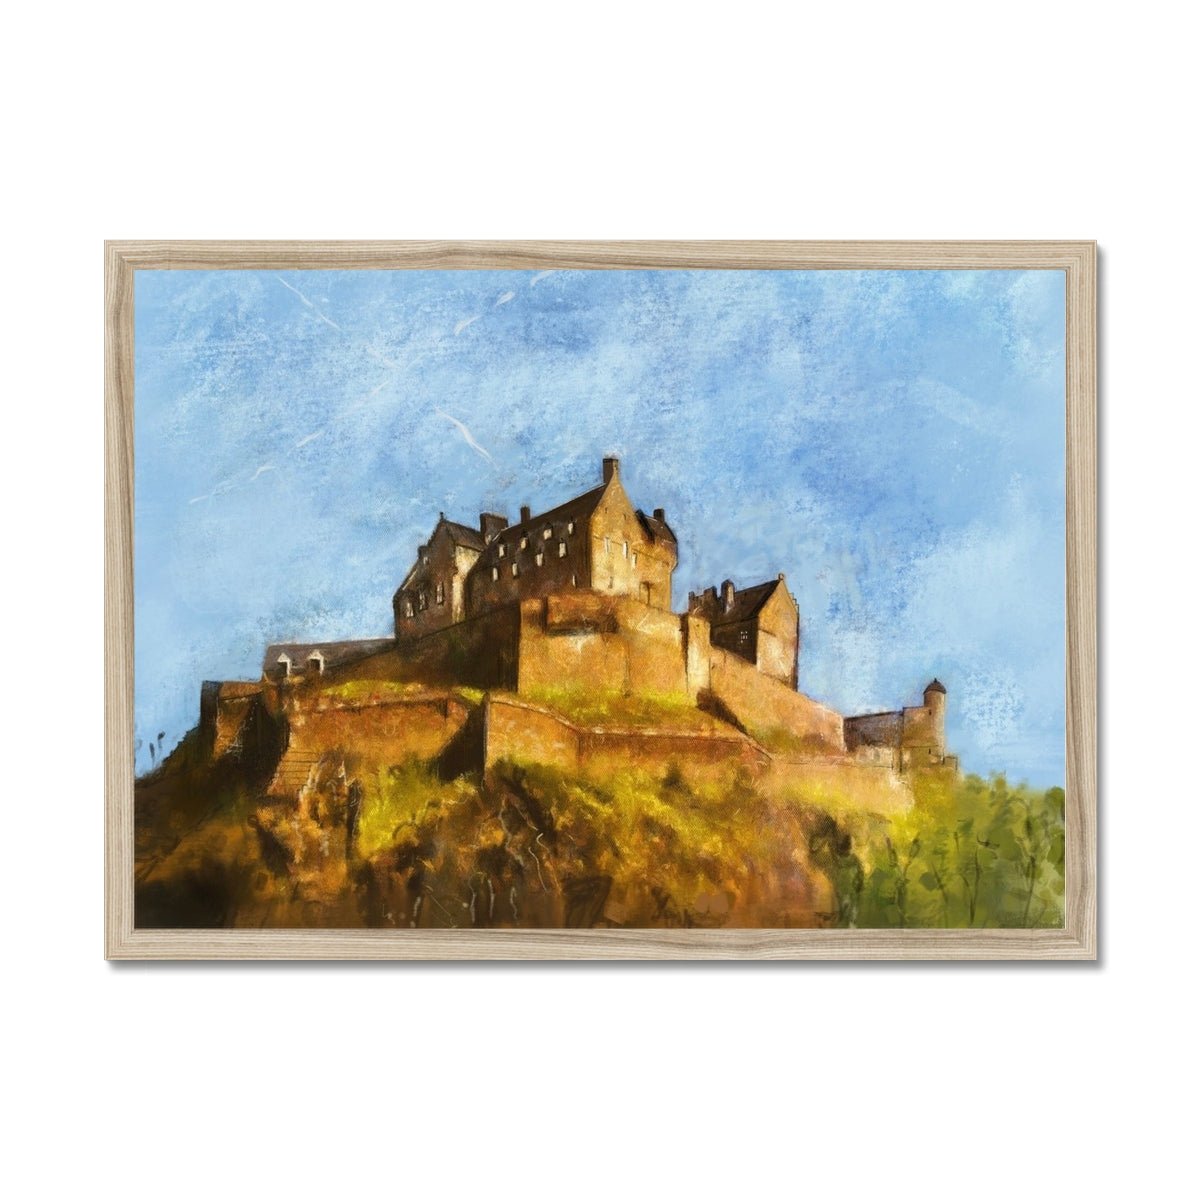 Edinburgh Castle Painting | Framed Prints From Scotland-Framed Prints-Edinburgh & Glasgow Art Gallery-A2 Landscape-Natural Frame-Paintings, Prints, Homeware, Art Gifts From Scotland By Scottish Artist Kevin Hunter